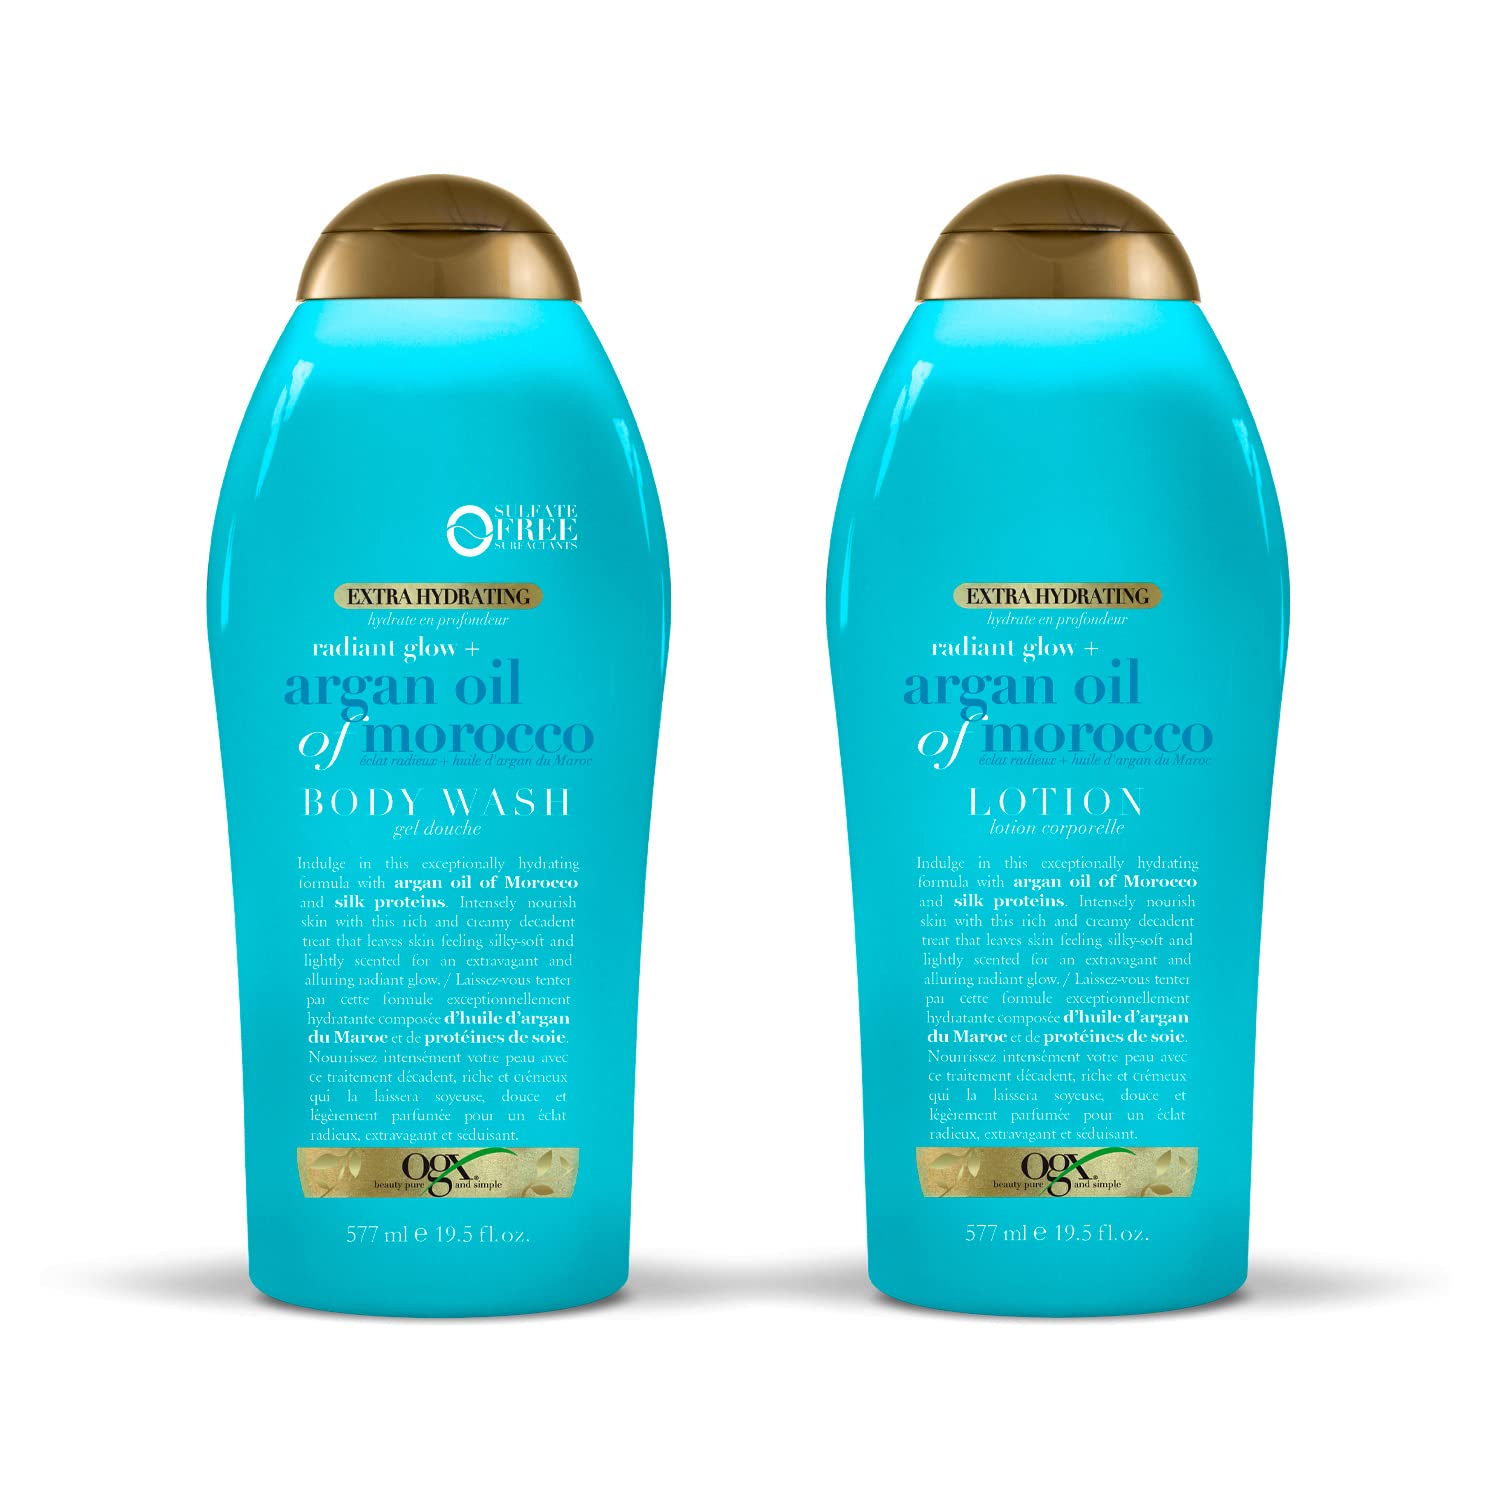 OGX Radiant Glow + Argan Oil of Morocco Extra Hydrating Body Wash for Dry Skin Radiant Glow + Argan Oil of Morocco Extra Hydrating Body Lotion for Dry Skin, Nourishing Creamy